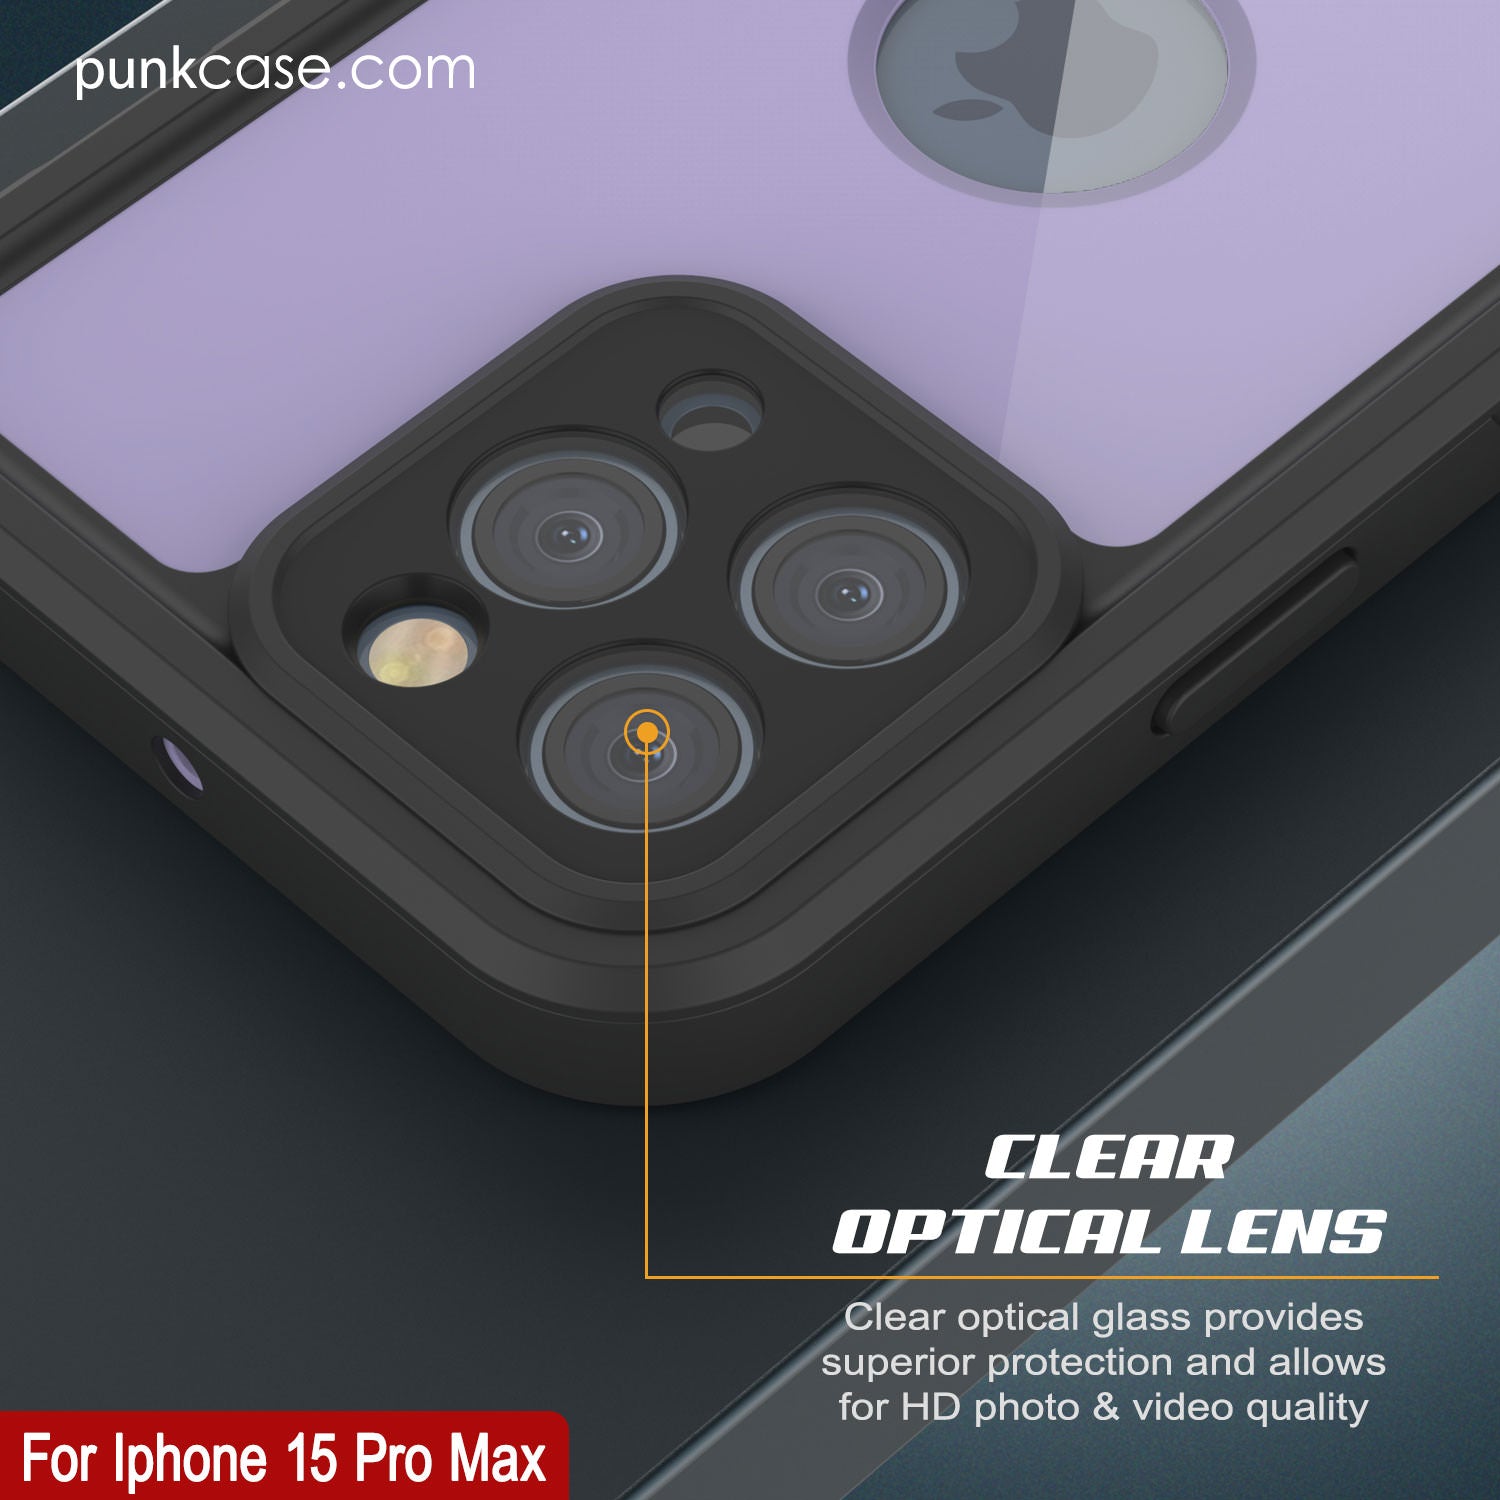 iPhone 15 Pro Max Waterproof IP68 Case, Punkcase [Lilac] [StudStar Series] [Slim Fit] [Dirtproof]